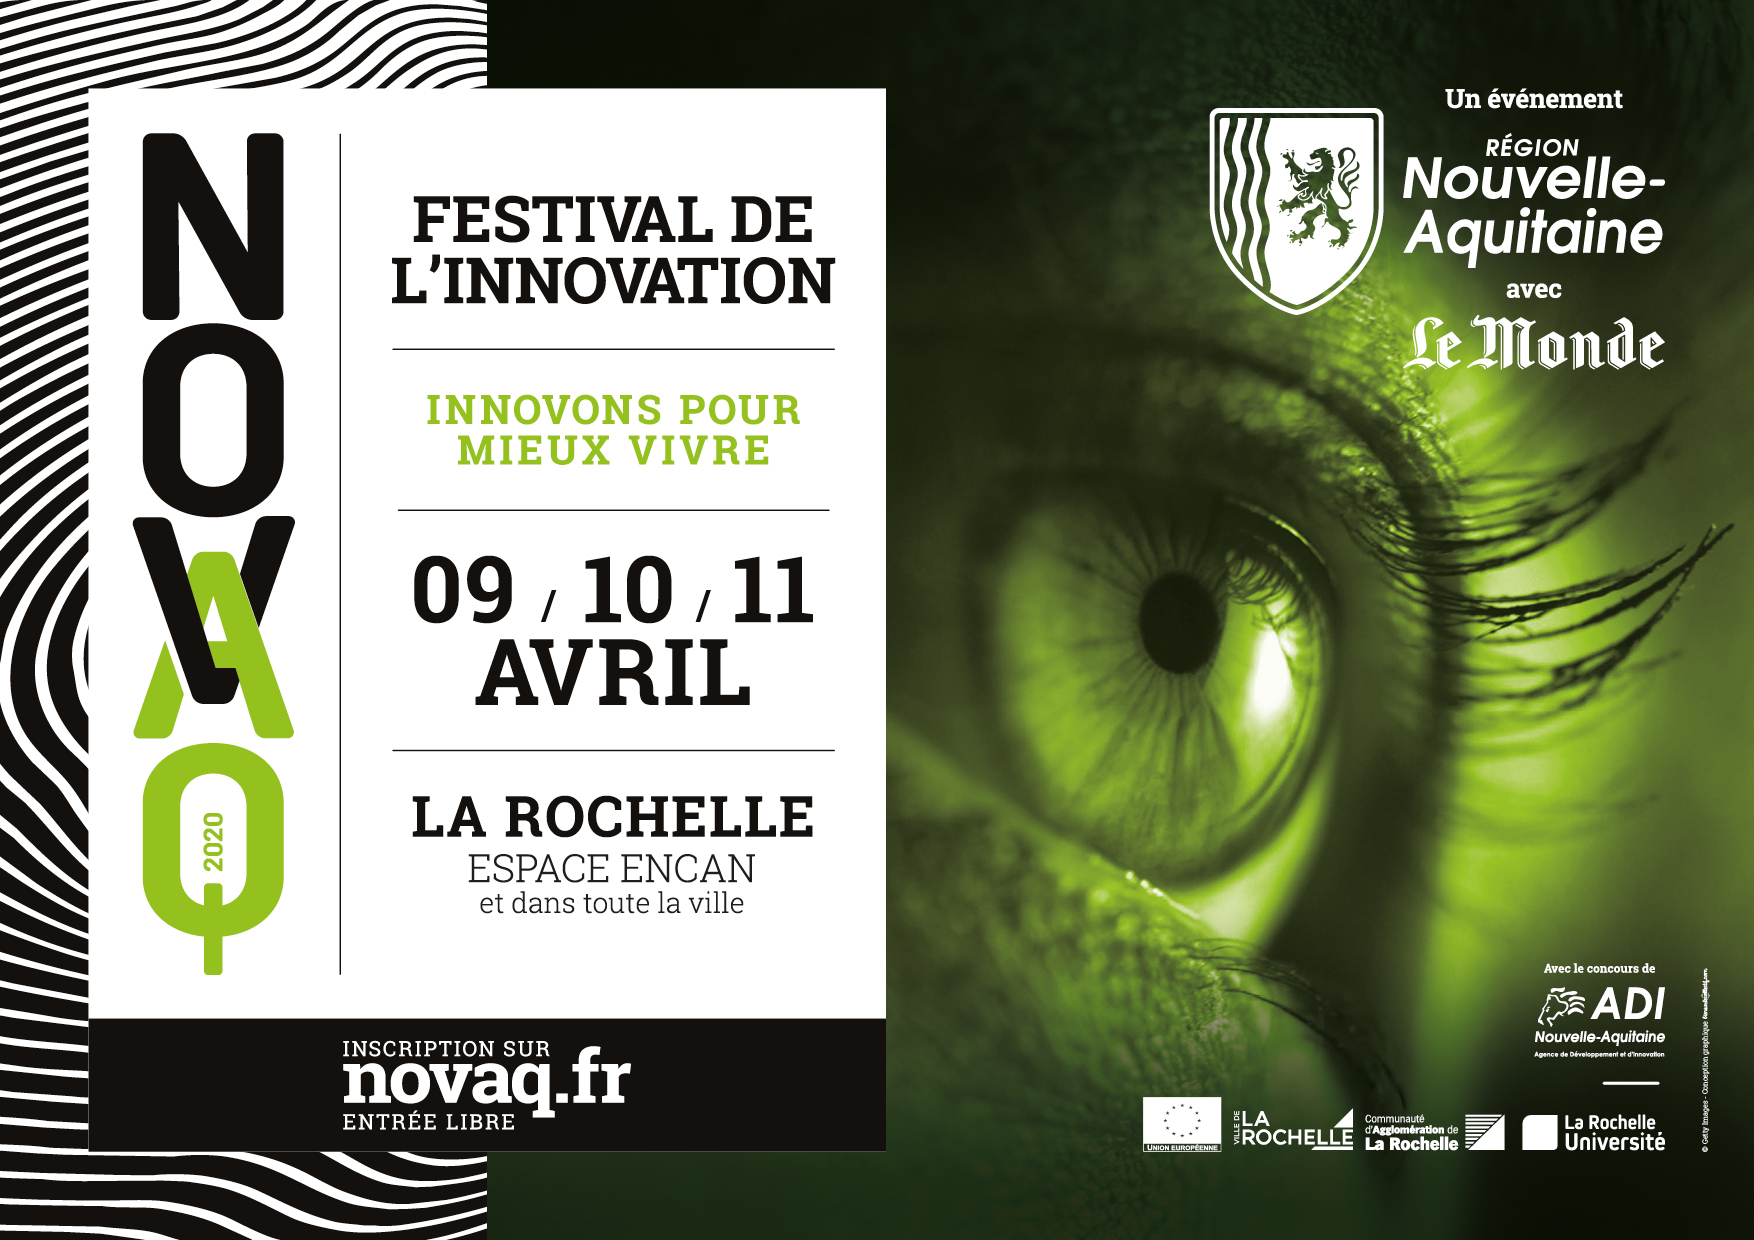 NOVAQ 2020 - Festival de l'innovation à La Rochelle